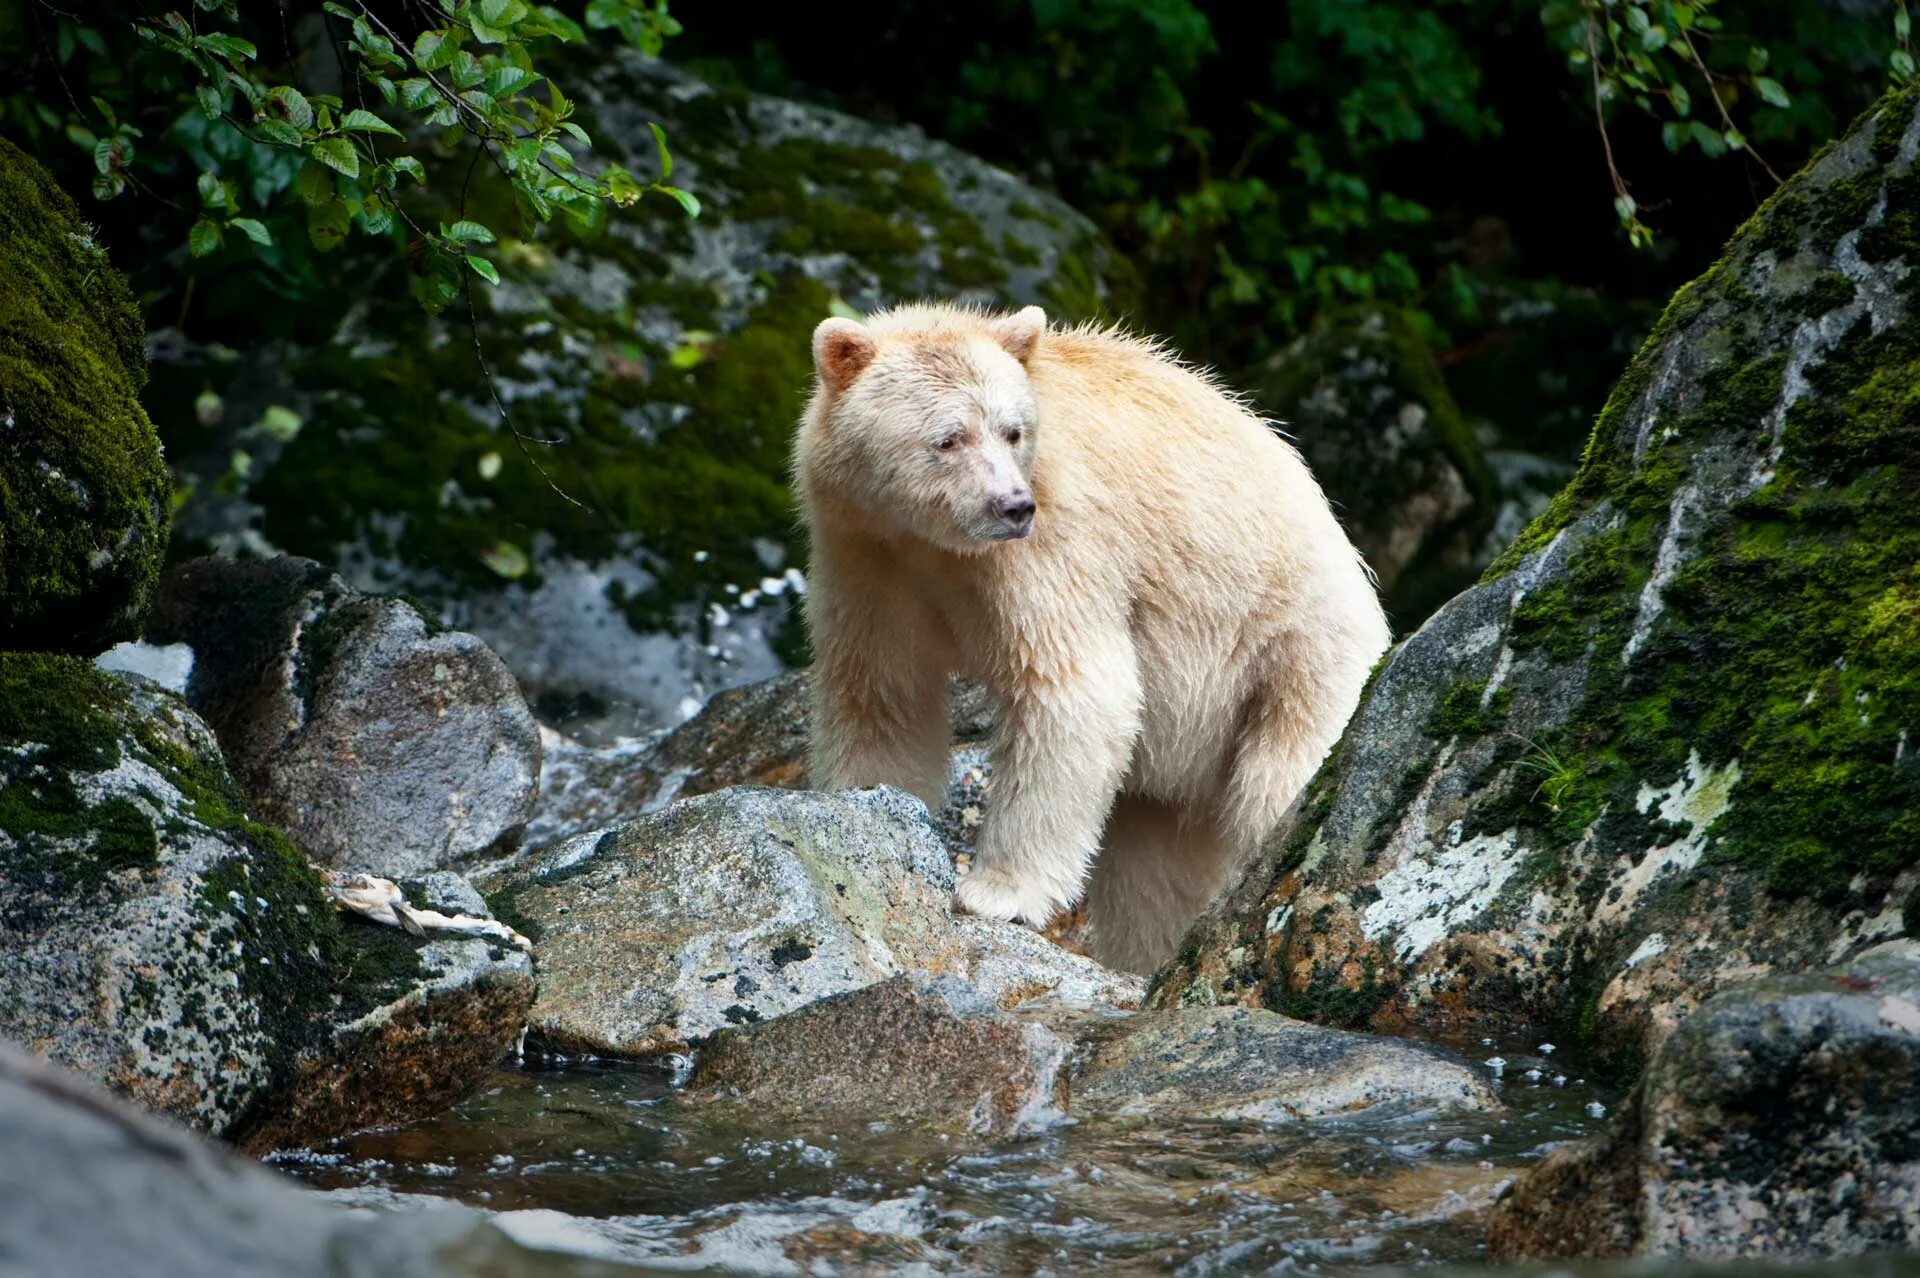 Медведь грыщлм альбинос. Медведь Гризли альбинос. Медведь Гризли альбинос в Канаде. Бурый медведь альбинос.